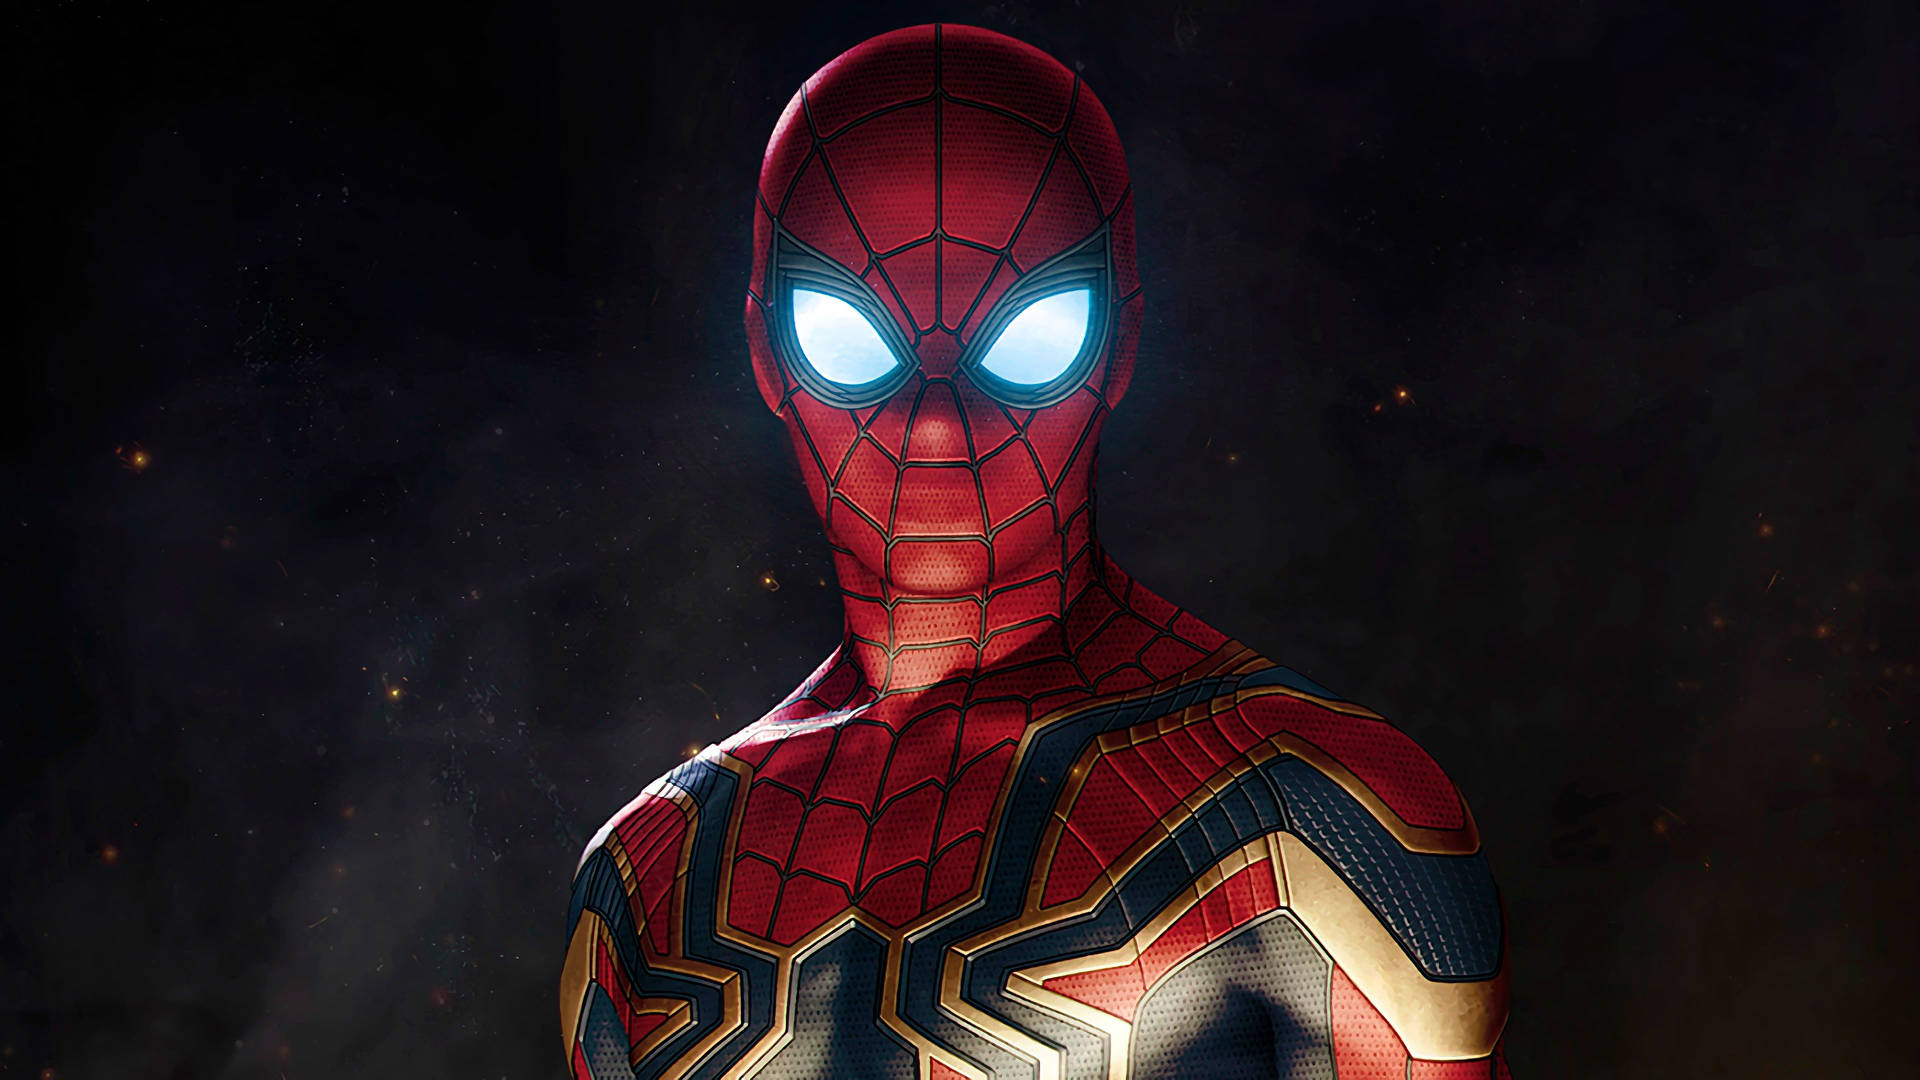 Marvel Avengers Iron Spider Background